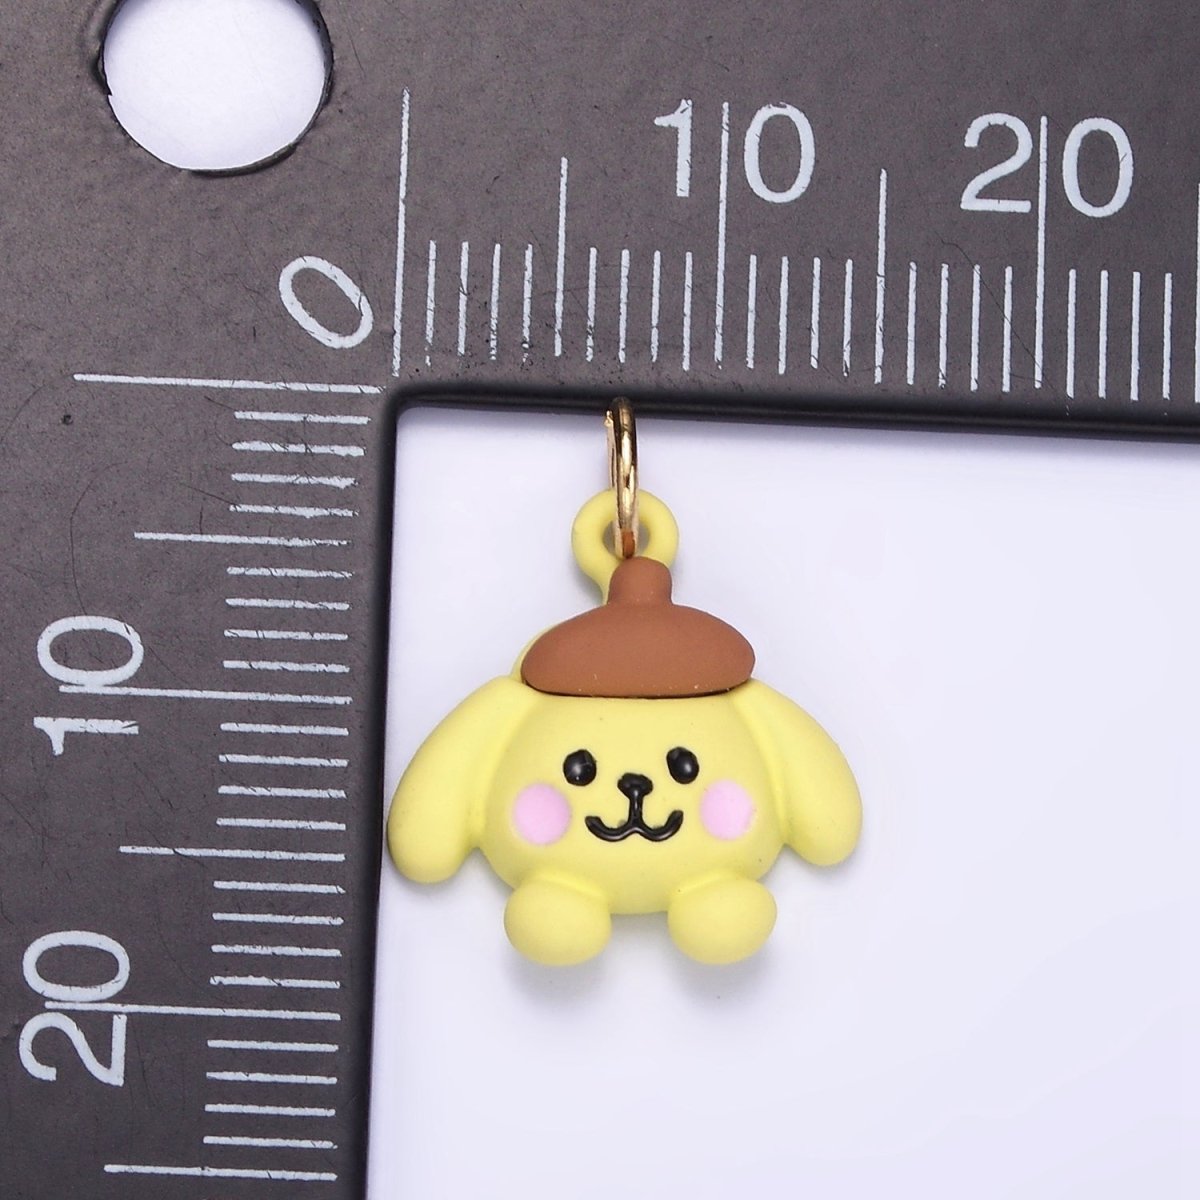 24K Gold Filled Mini Bear Dog Yellow Enamel Animal Charm | D030 - DLUXCA